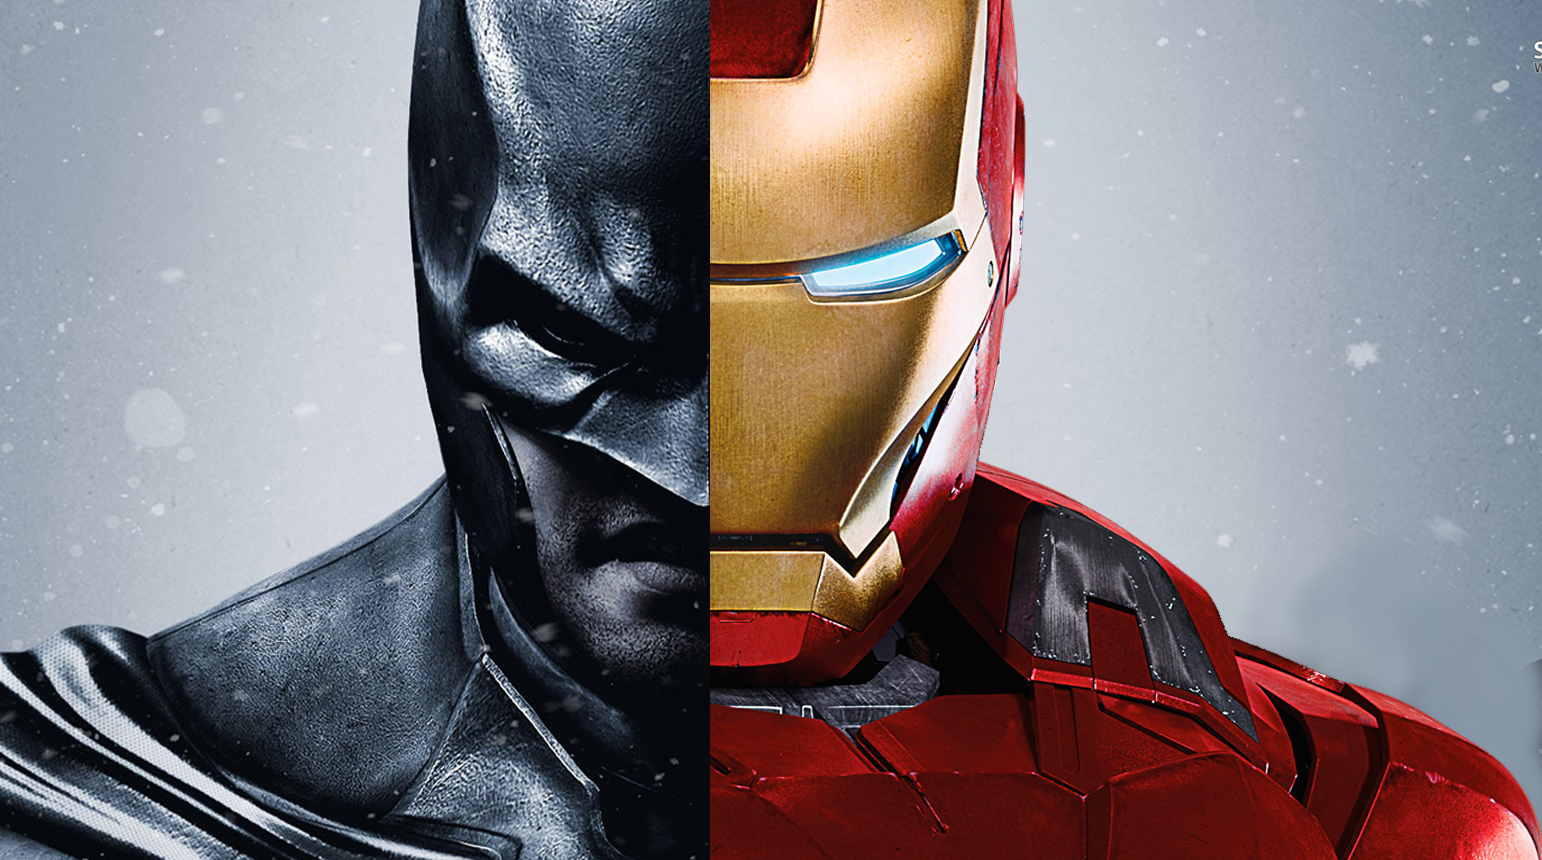 Batman Vs Iron Man | The Battle for Indian TV